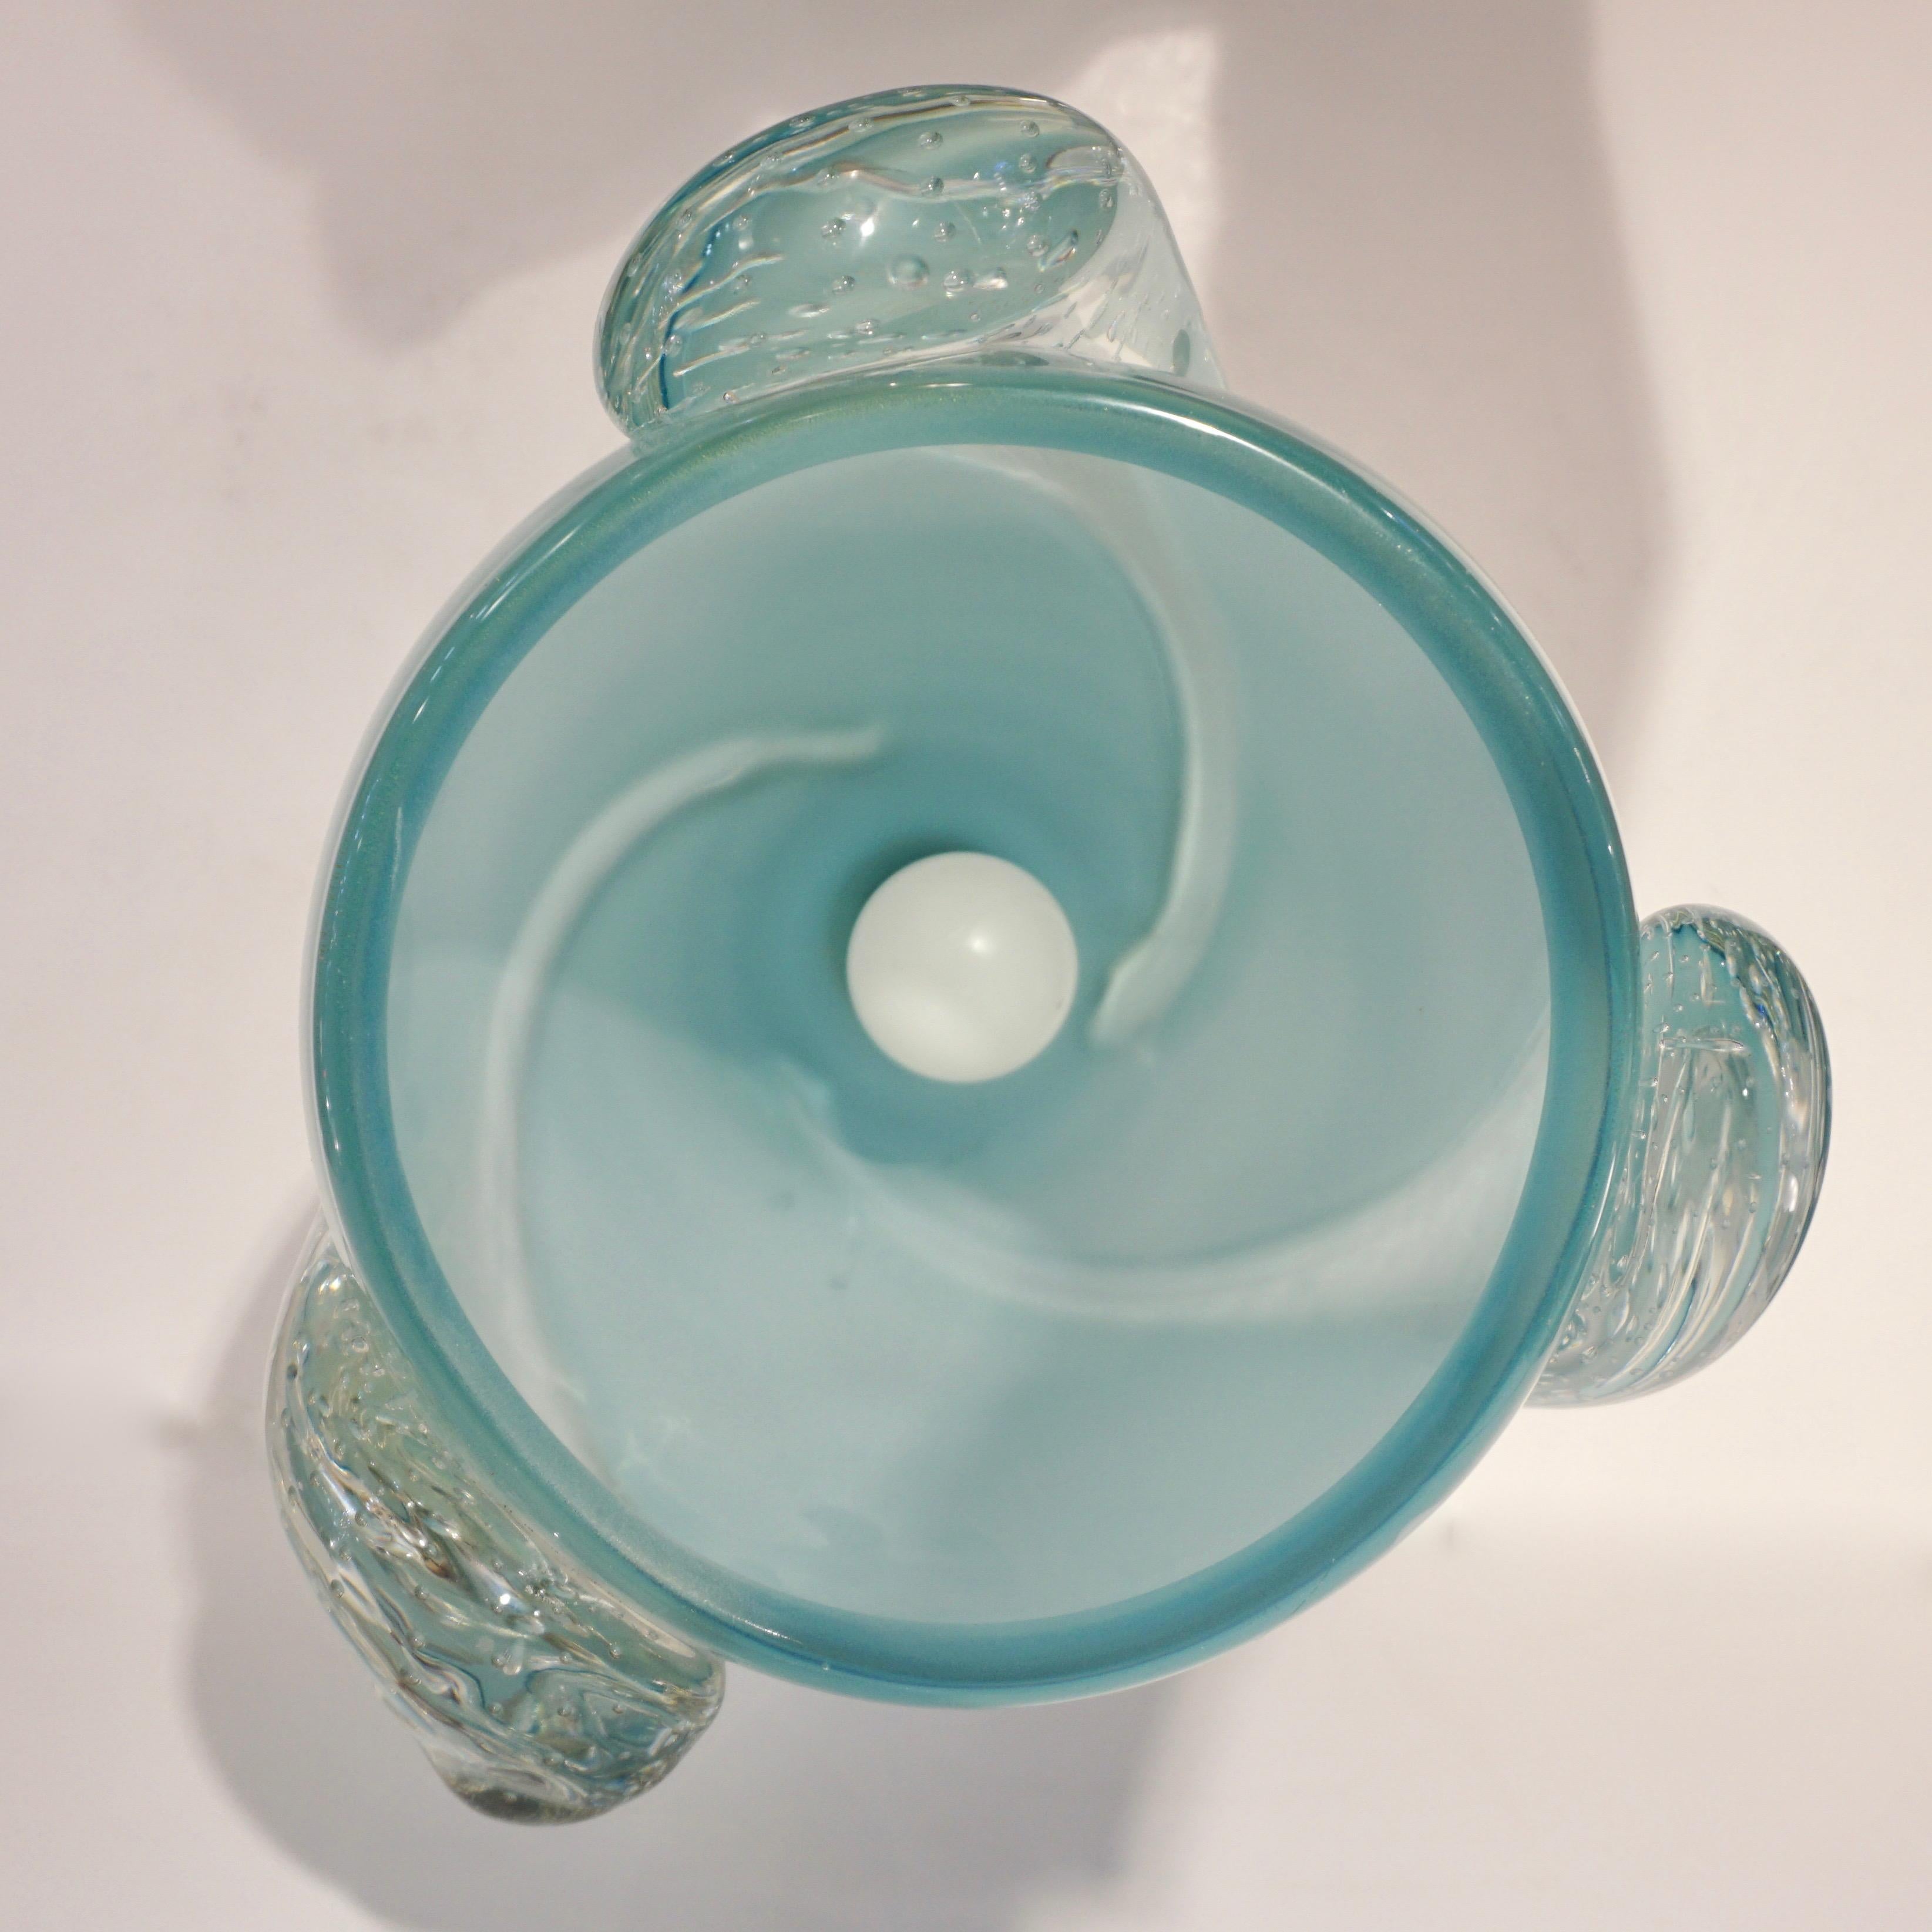 Barovier Toso Lampe organique en verre de Murano bleu aqua, contemporaine et moderne italienne en vente 4